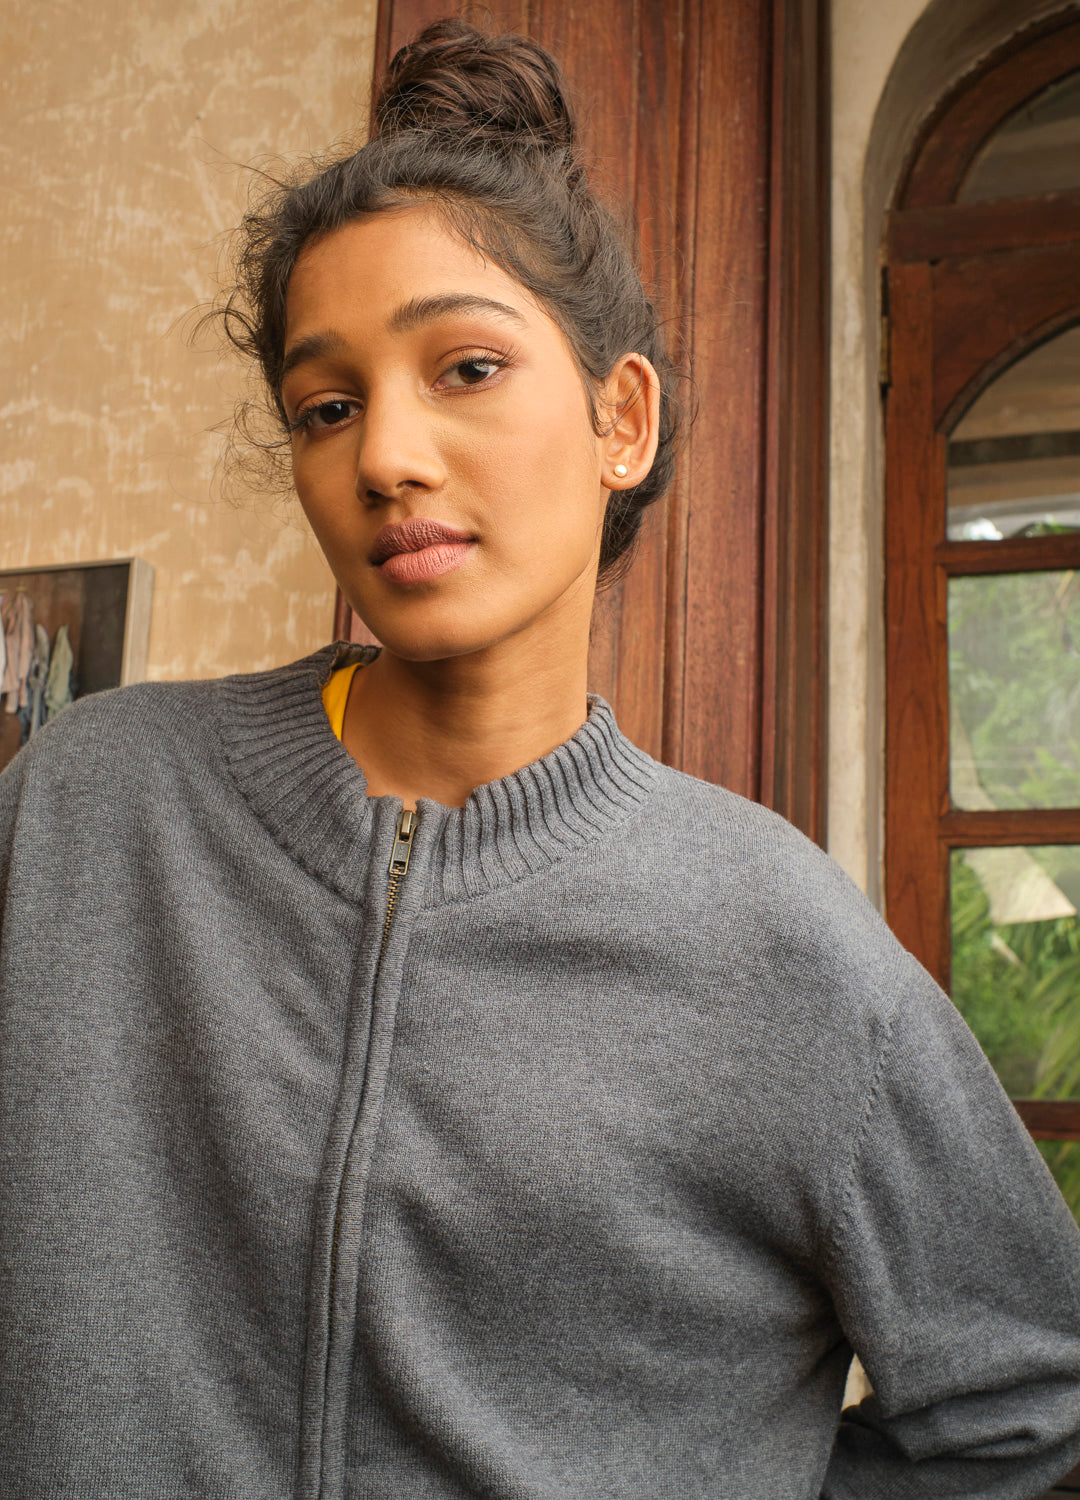  Charcoal Grey Zip-Up Sustainable Winter Jacket For Women Online